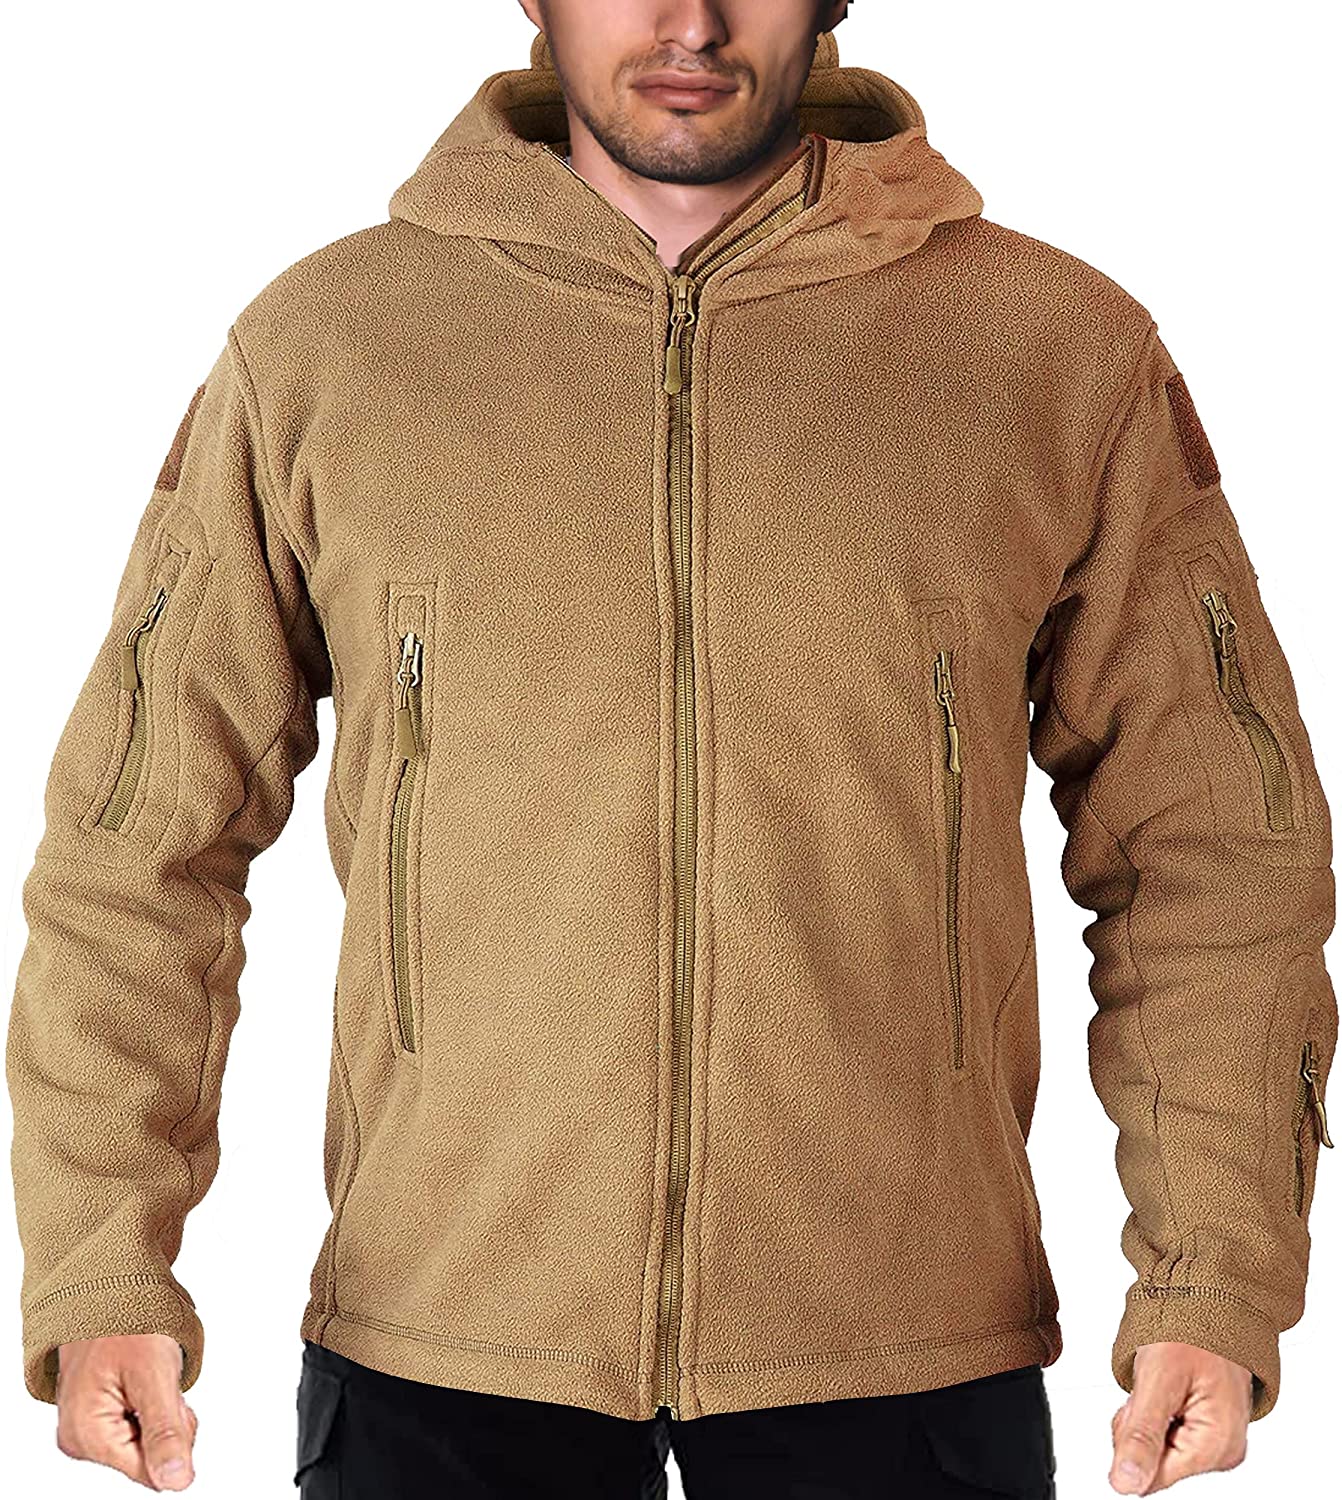 CHEXPEL mens tactical military Combat Jacket Winter Hooded Waterproof Snow Ski Softshell coat